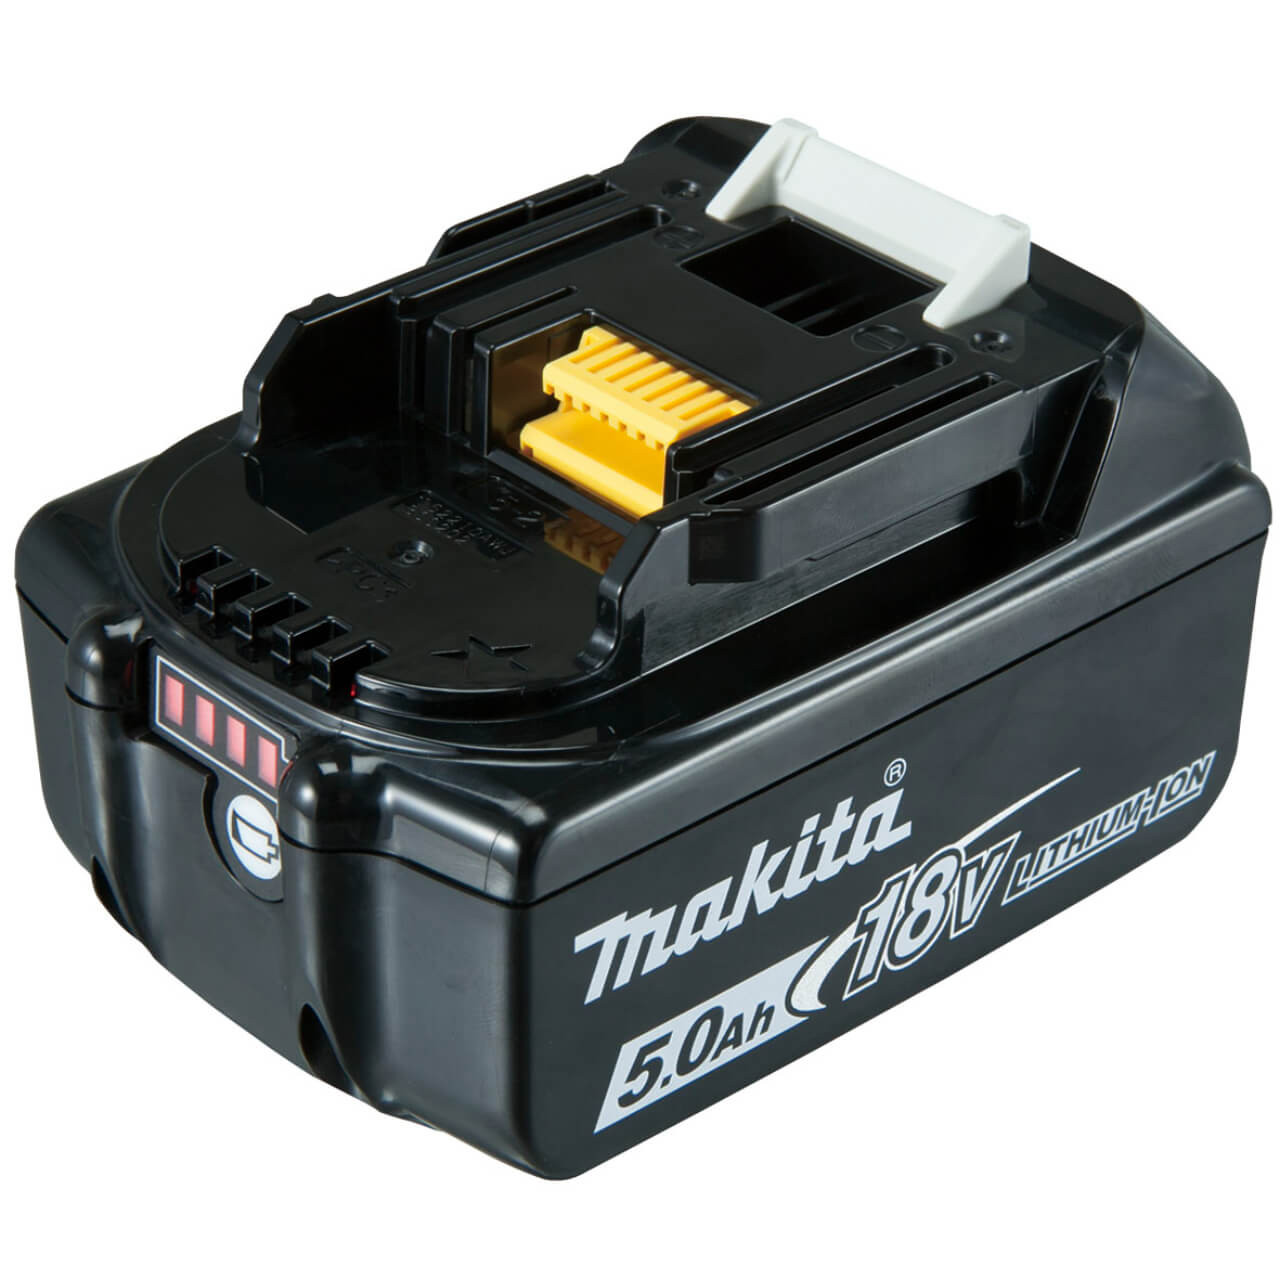 Makita 18V BRUSHLESS 125mm Slide Switch Brake Angle Grinder Kit - Includes 2 x 5.0Ah Batteries. Rapid Charger & Carry Case